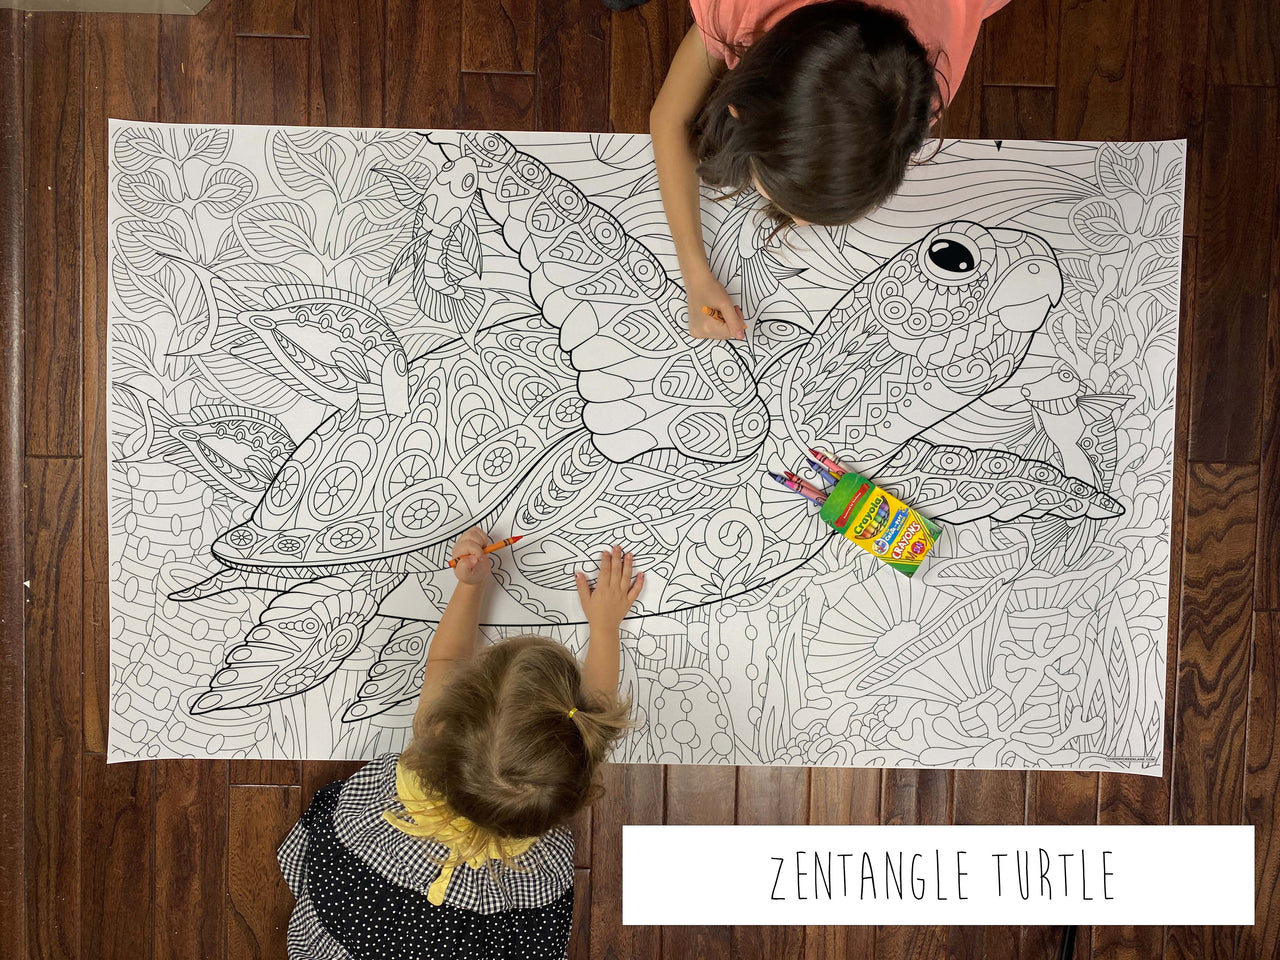 Zentangle turtle huge coloring sheet â